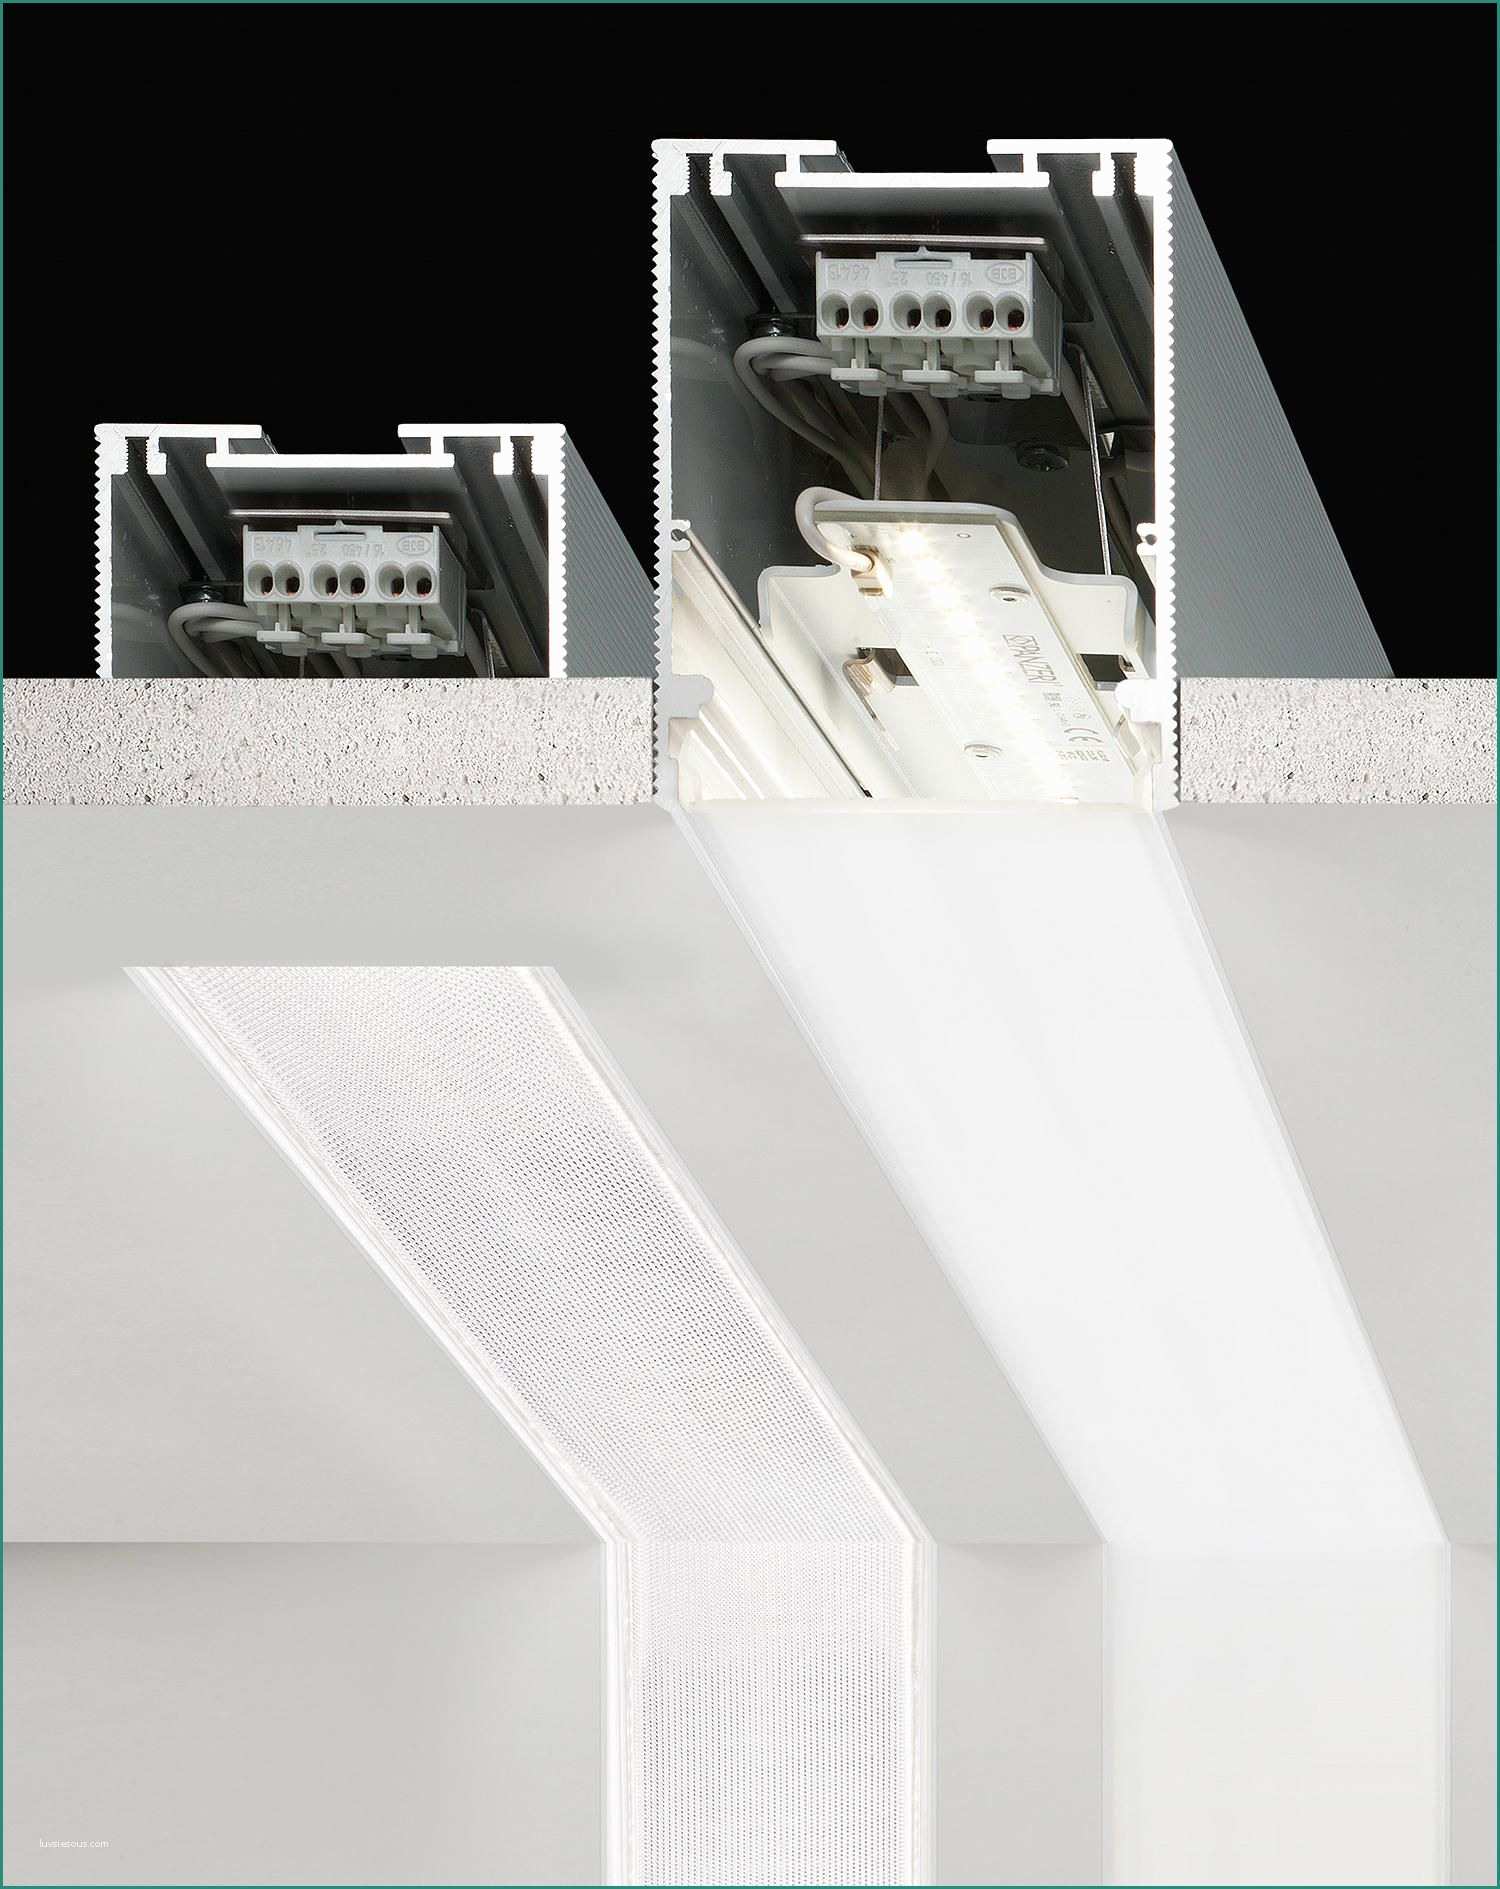 Faretti In Gesso Per Cartongesso E Lighting System In the Recessed or Suspension Wall Ceiling Version